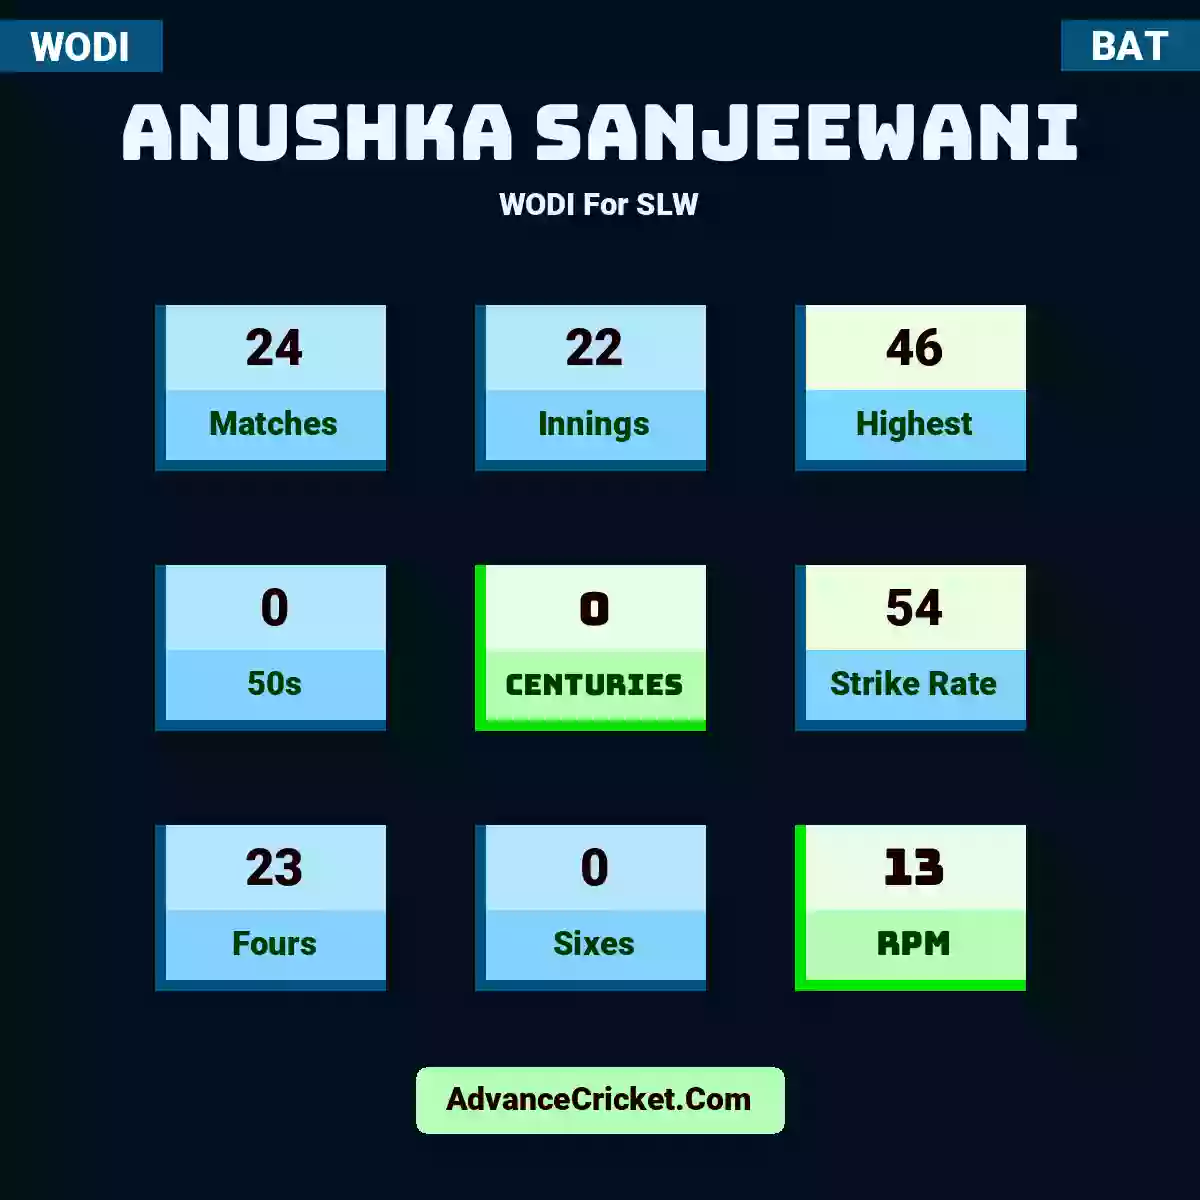 Anushka Sanjeewani WODI  For SLW, Anushka Sanjeewani played 24 matches, scored 46 runs as highest, 0 half-centuries, and 0 centuries, with a strike rate of 54. A.Sanjeewani hit 23 fours and 0 sixes, with an RPM of 13.